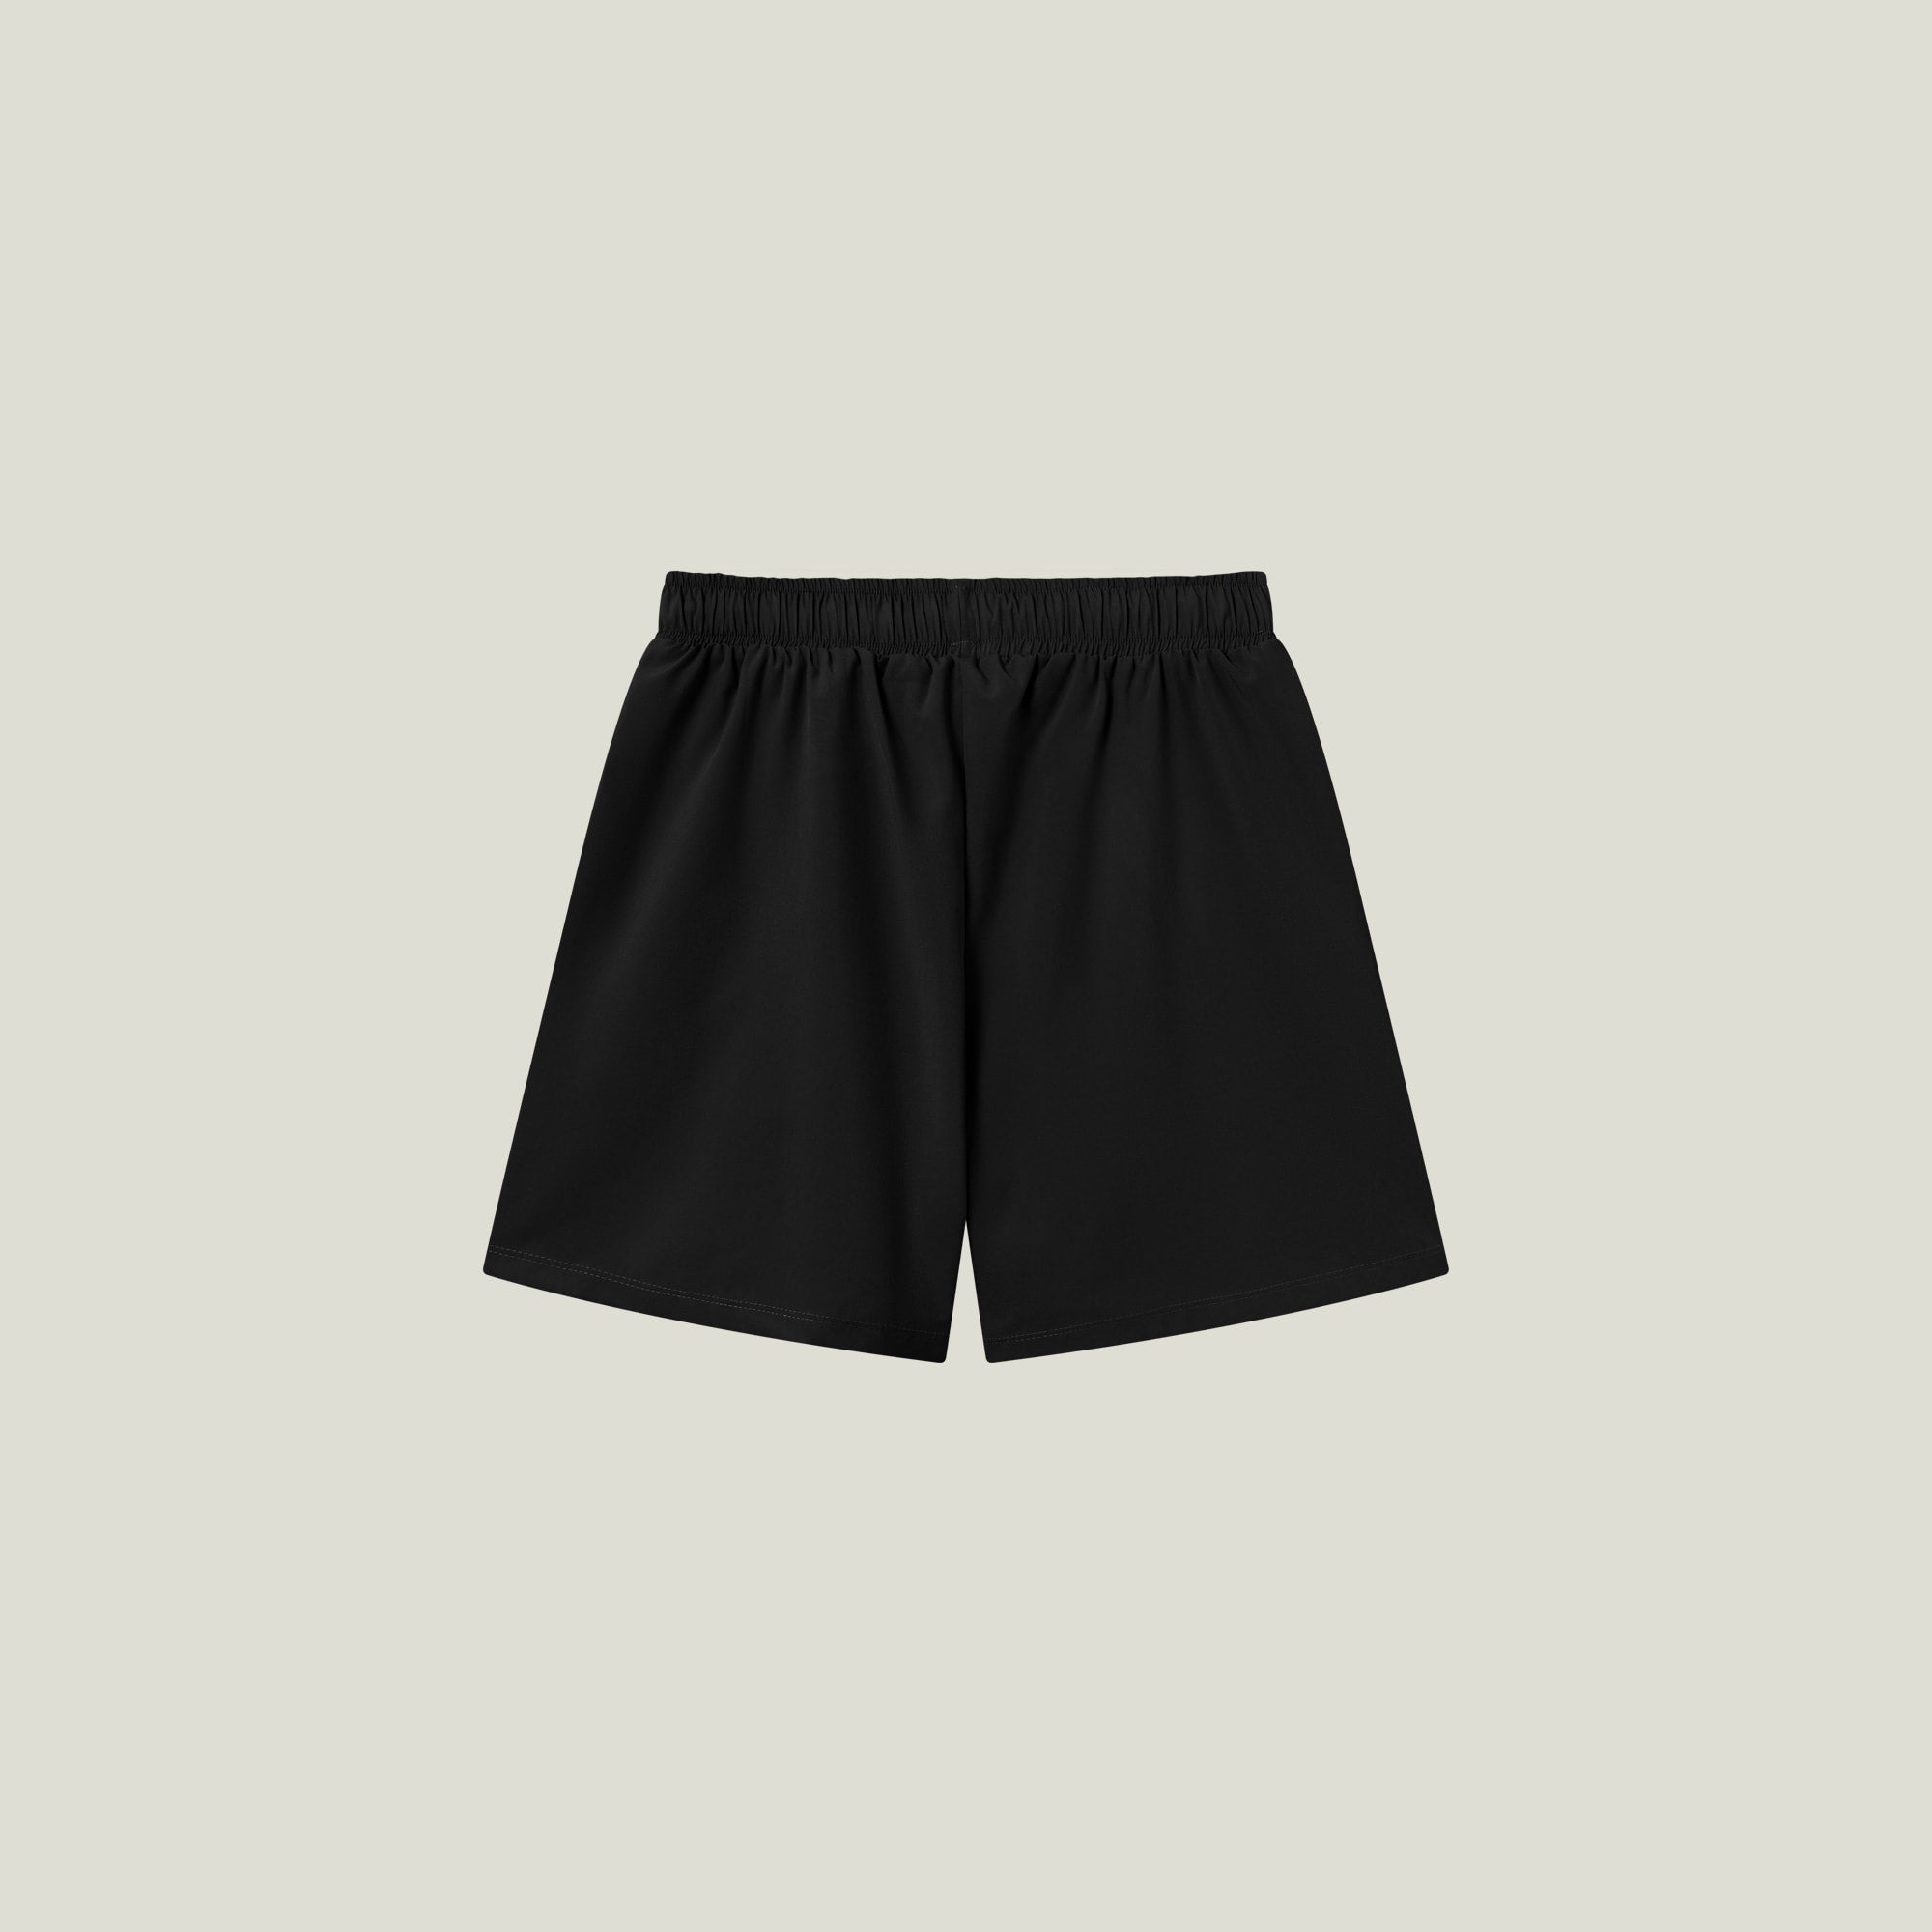 Oncourt Shorts & T-shirt Bundle